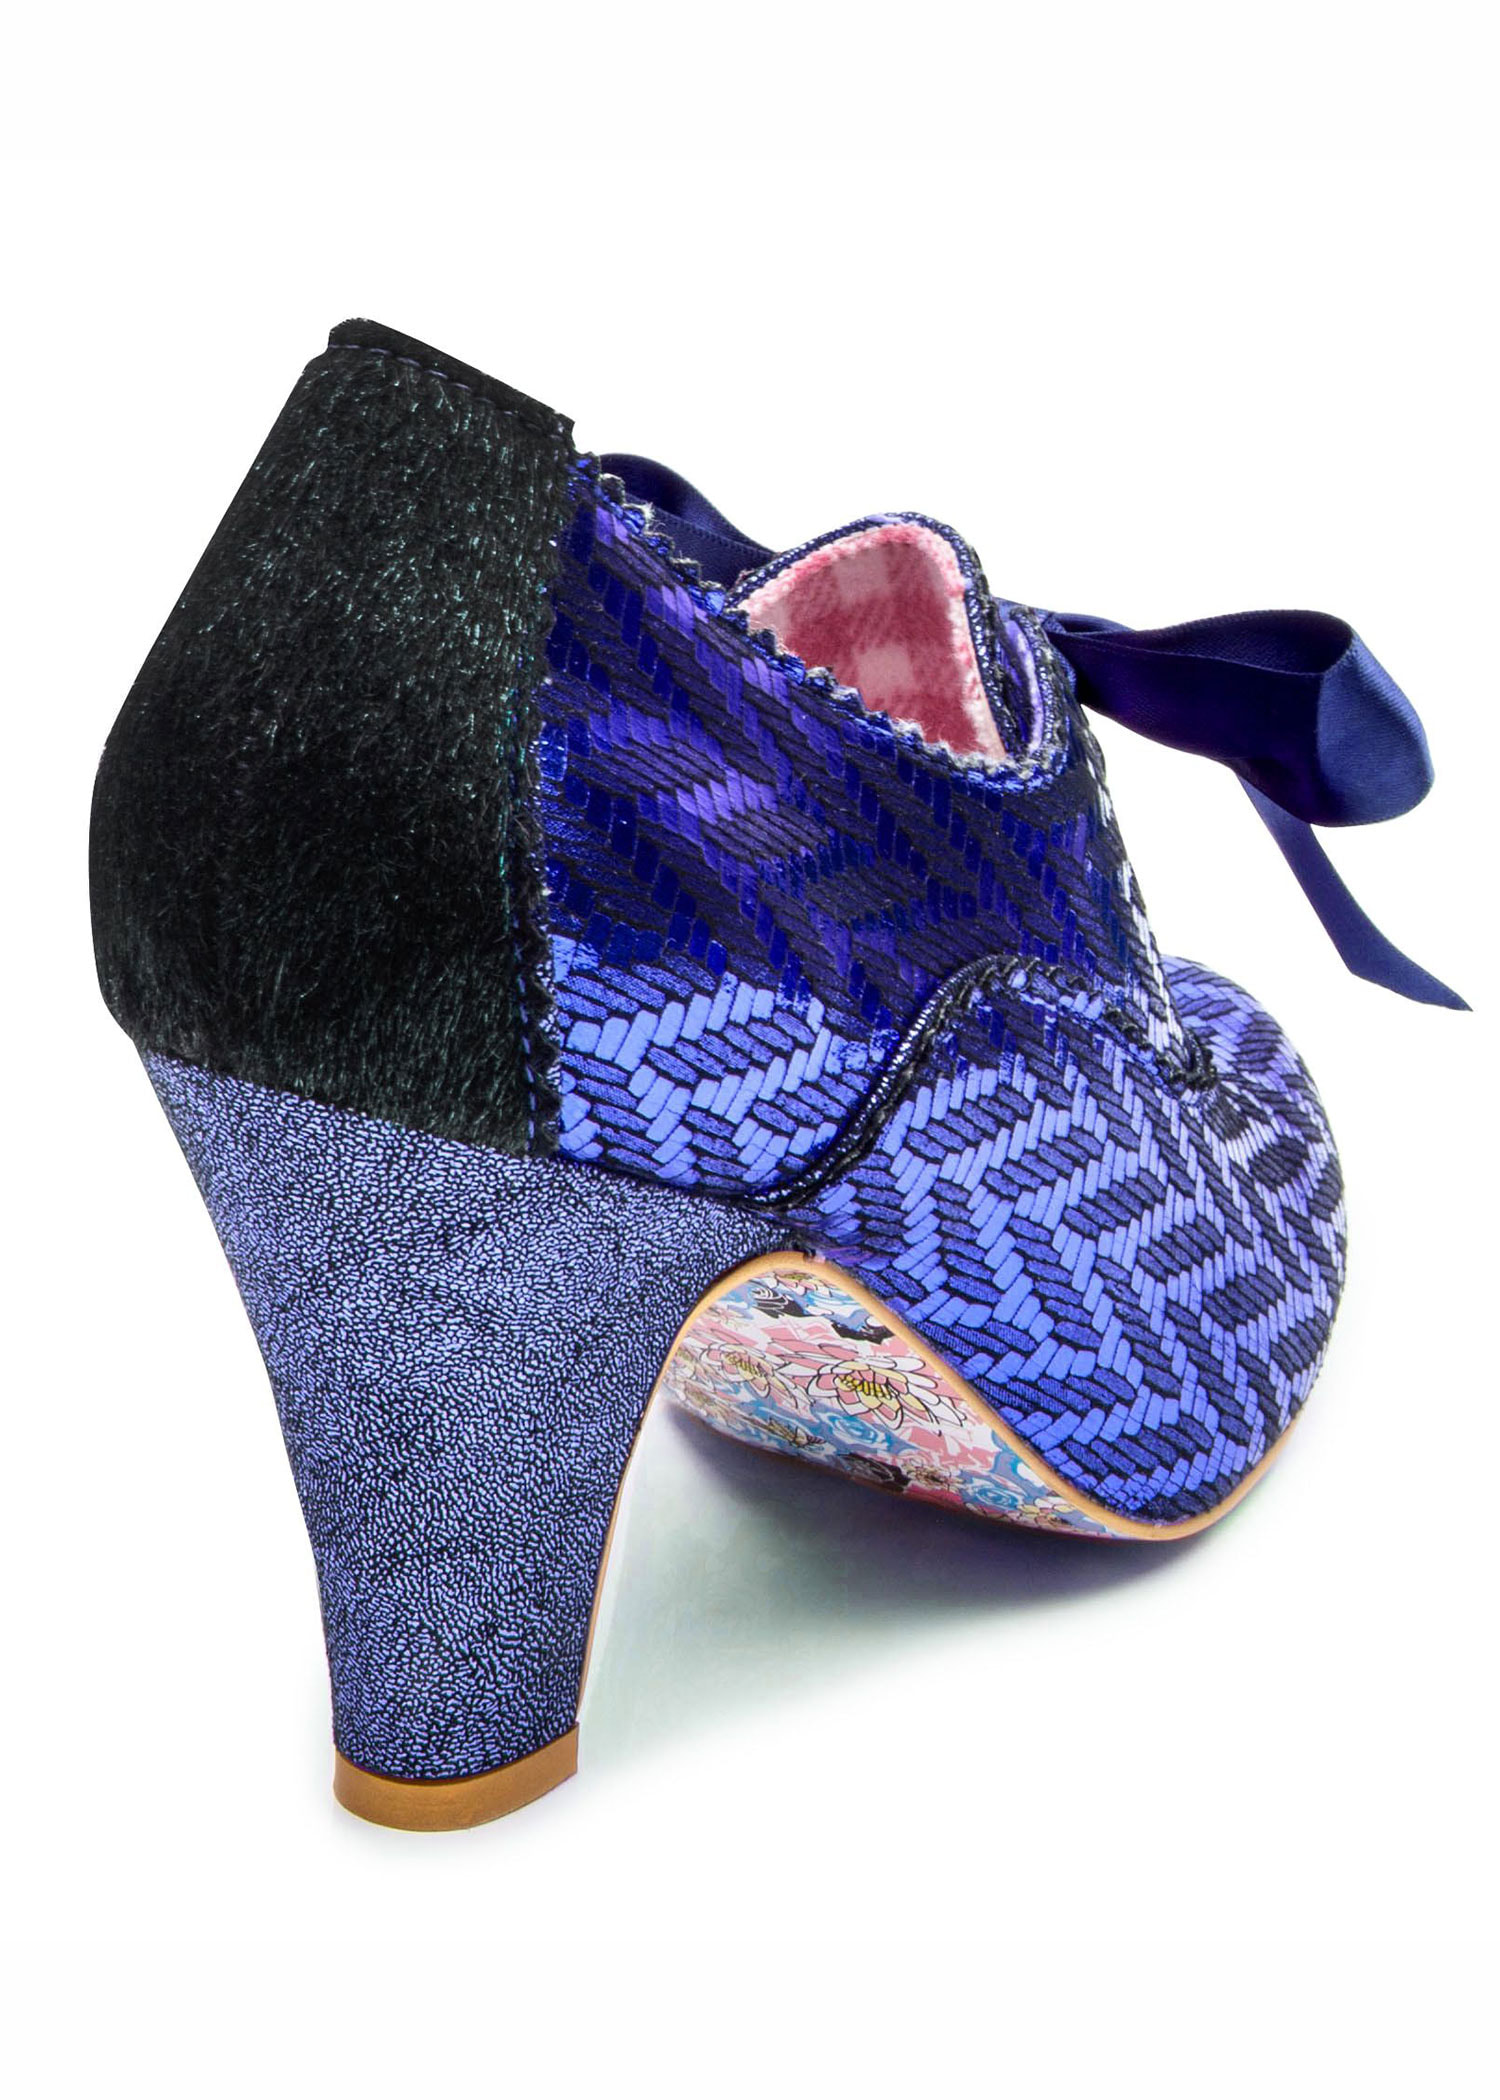 The Shoe Girl Diaries: Irregular Choice Festive Footwear 2022: Day 13